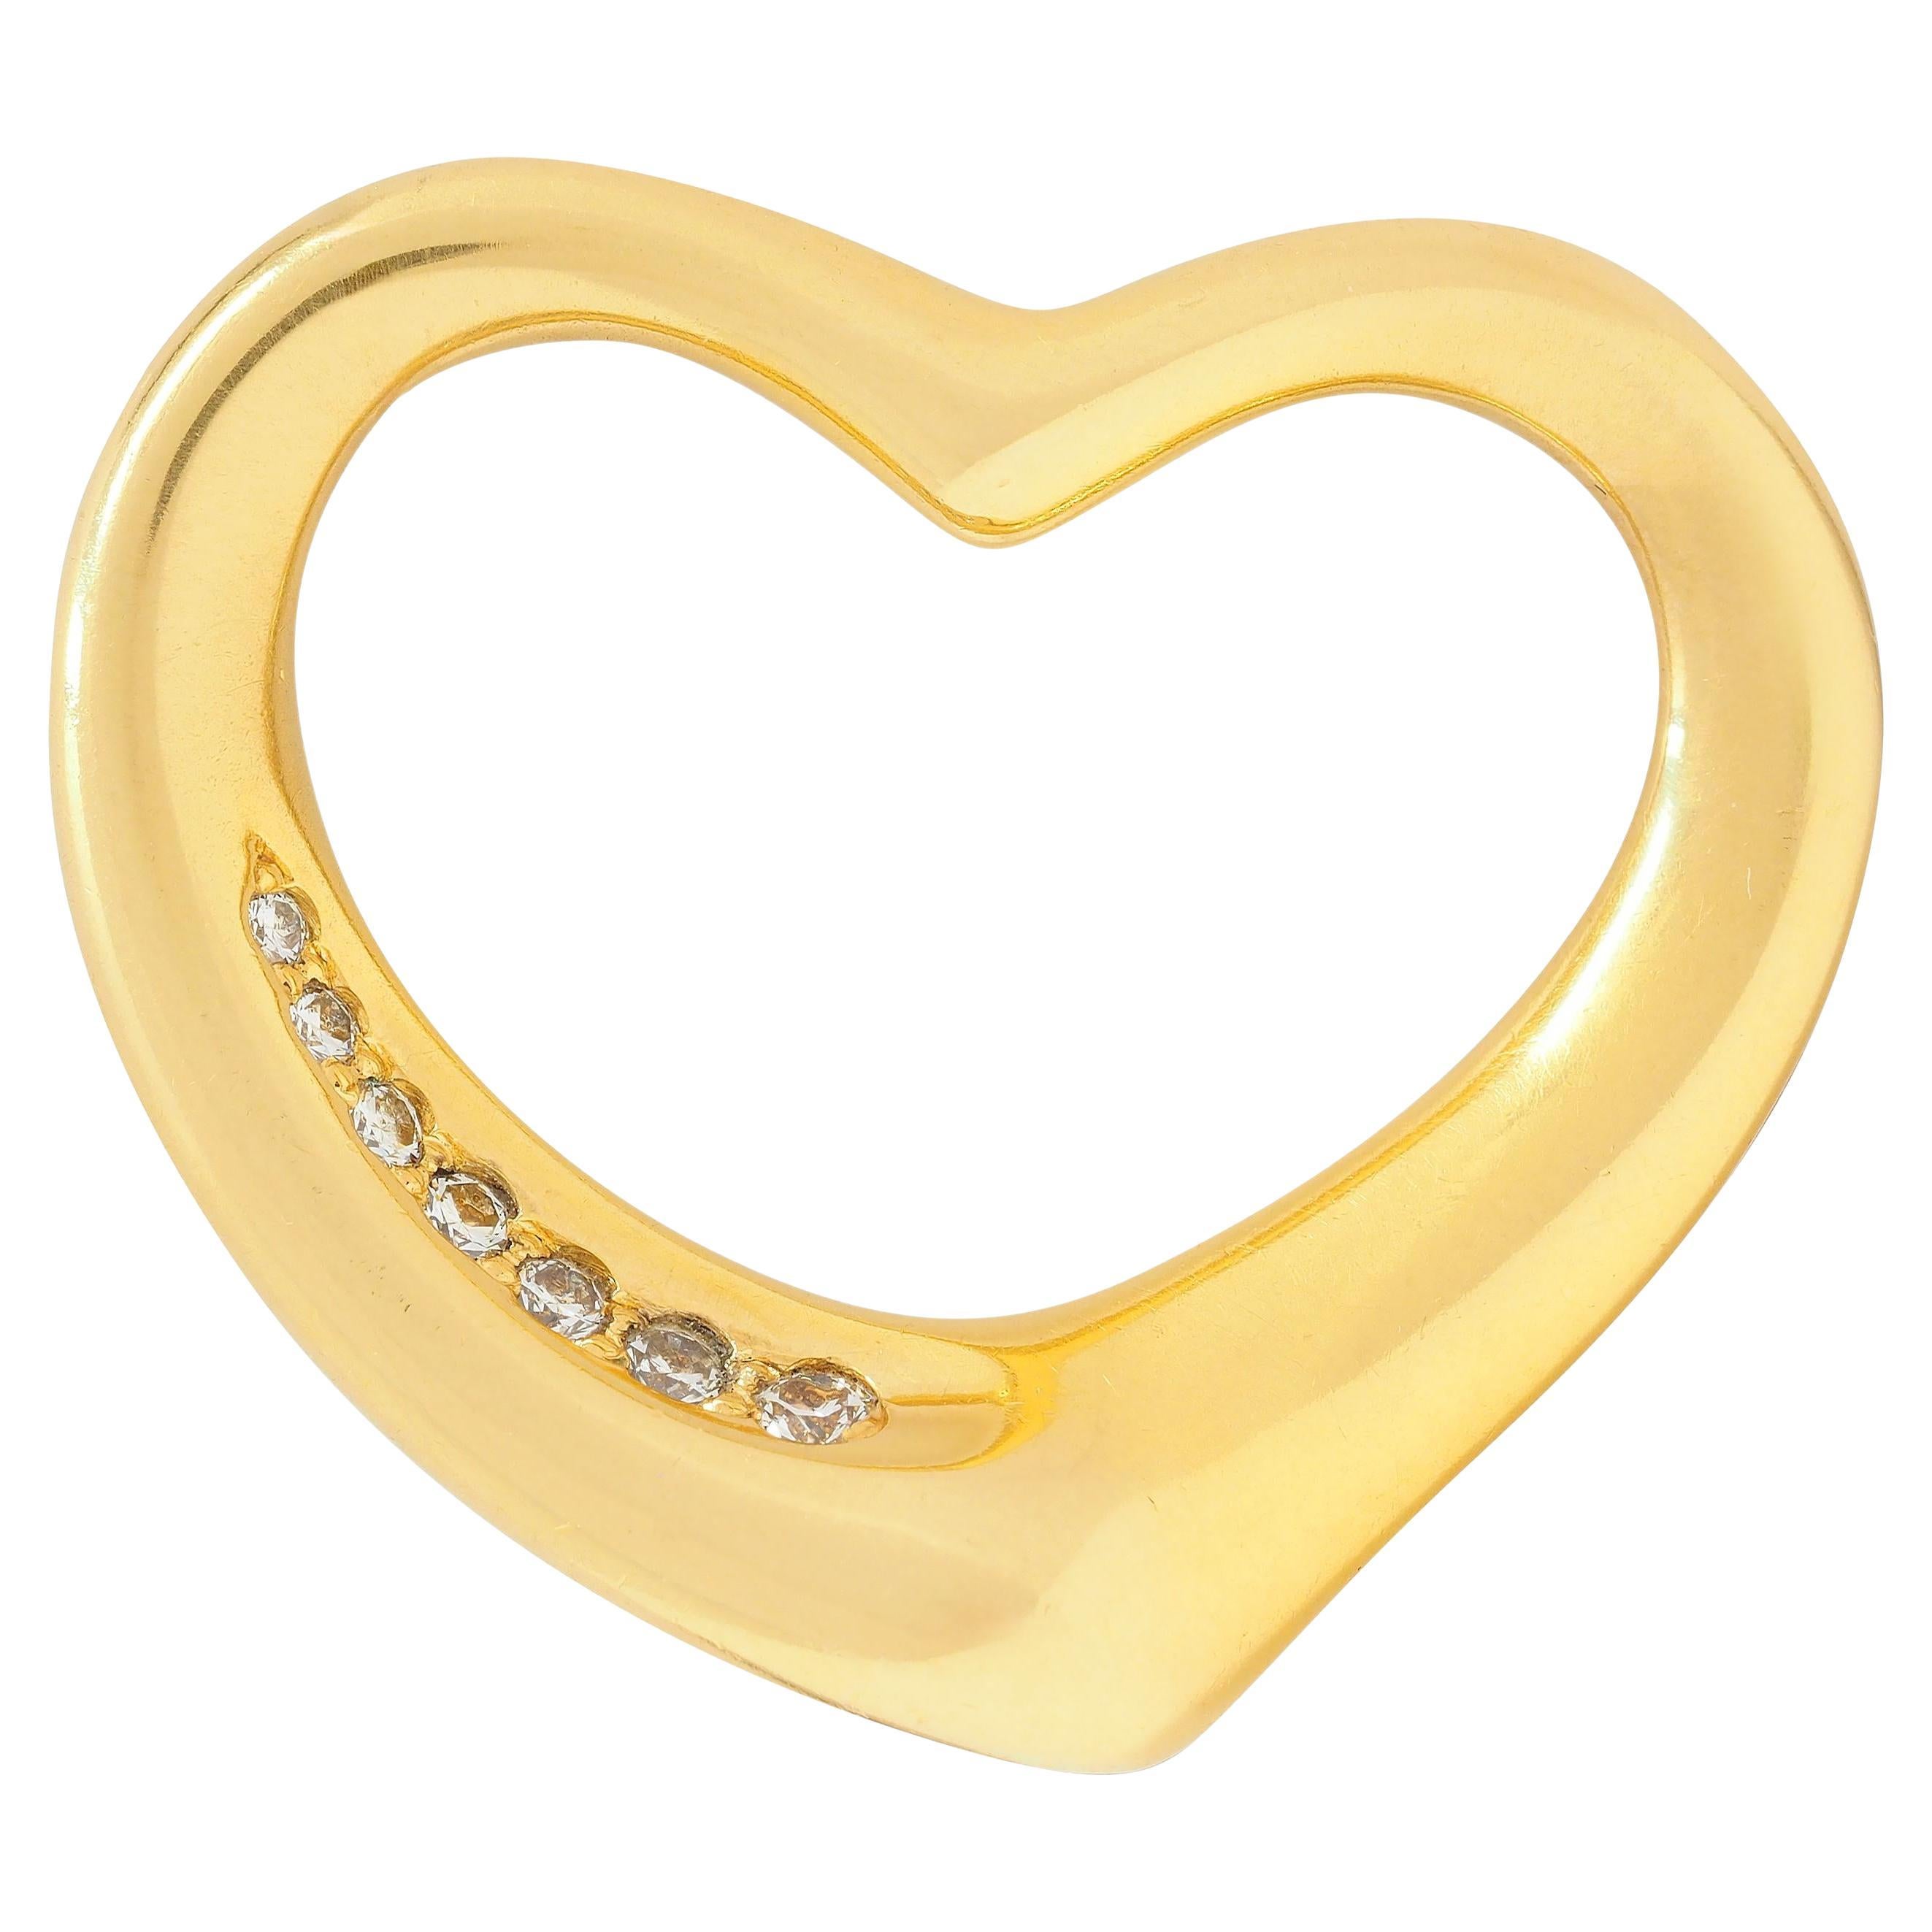 Elsa Peretti Tiffany & Co., pendentif cœur ouvert en or jaune 18 carats avec diamants, 2000